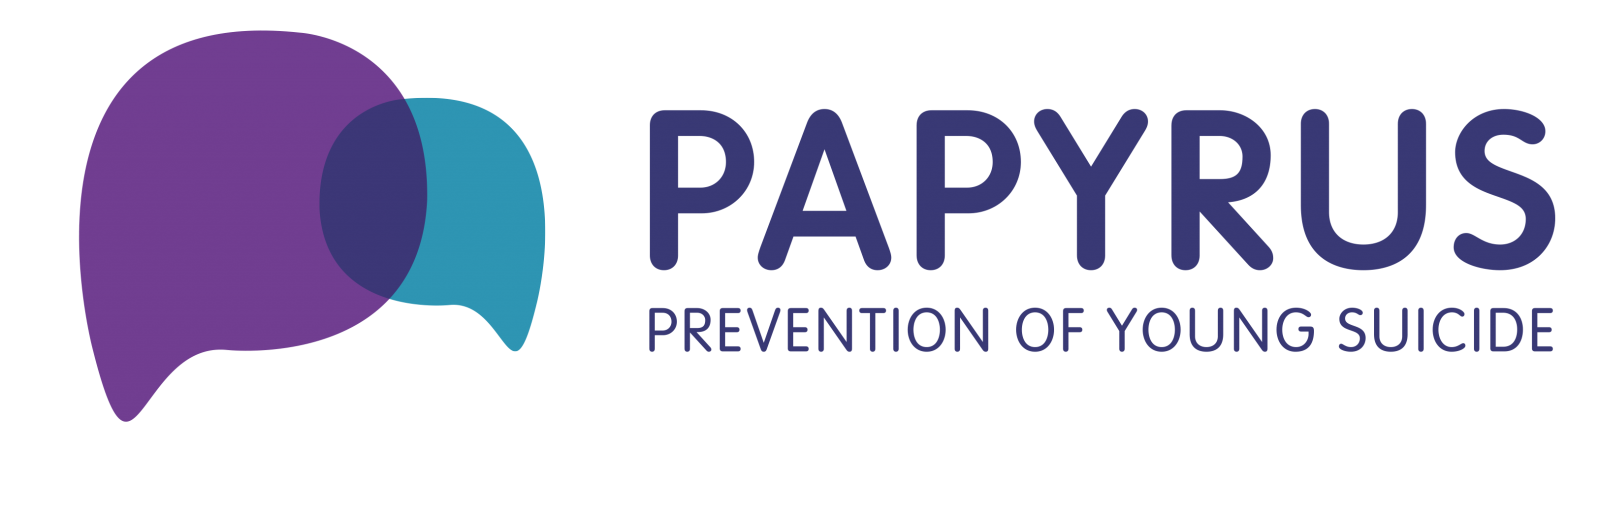 Papyrus charity logo 